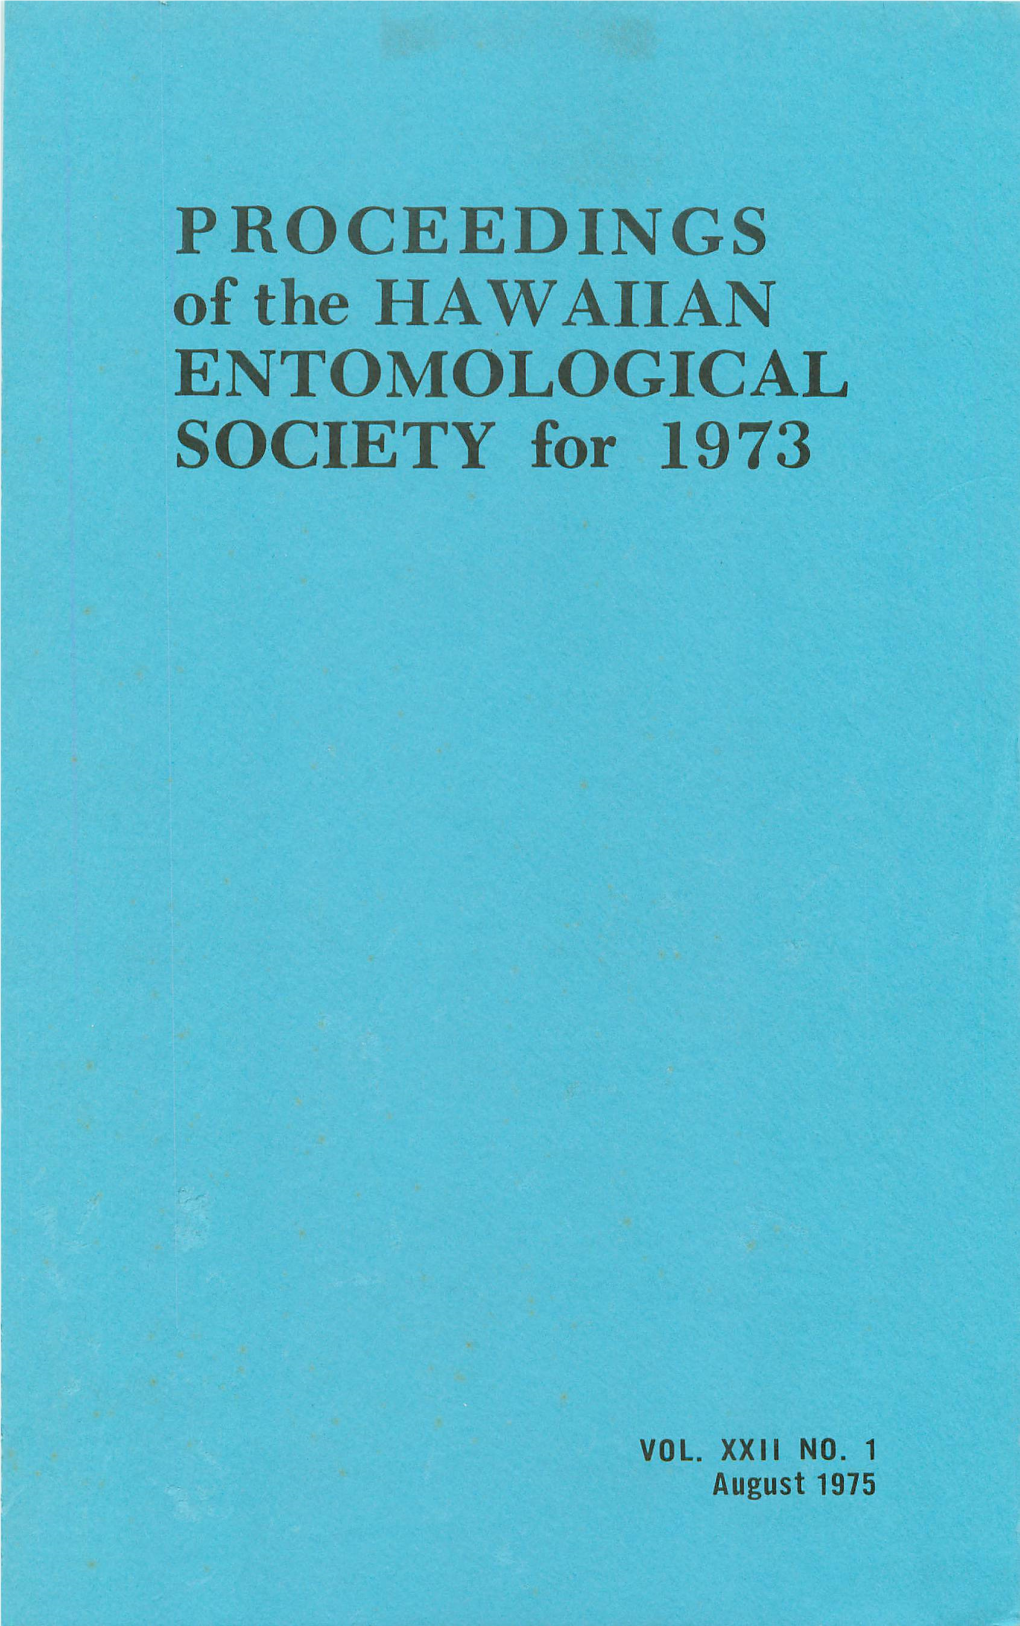 PROCEEDINGS of the HAWAIIAN ENTOMOLOGICAL SOCIETY for 1973